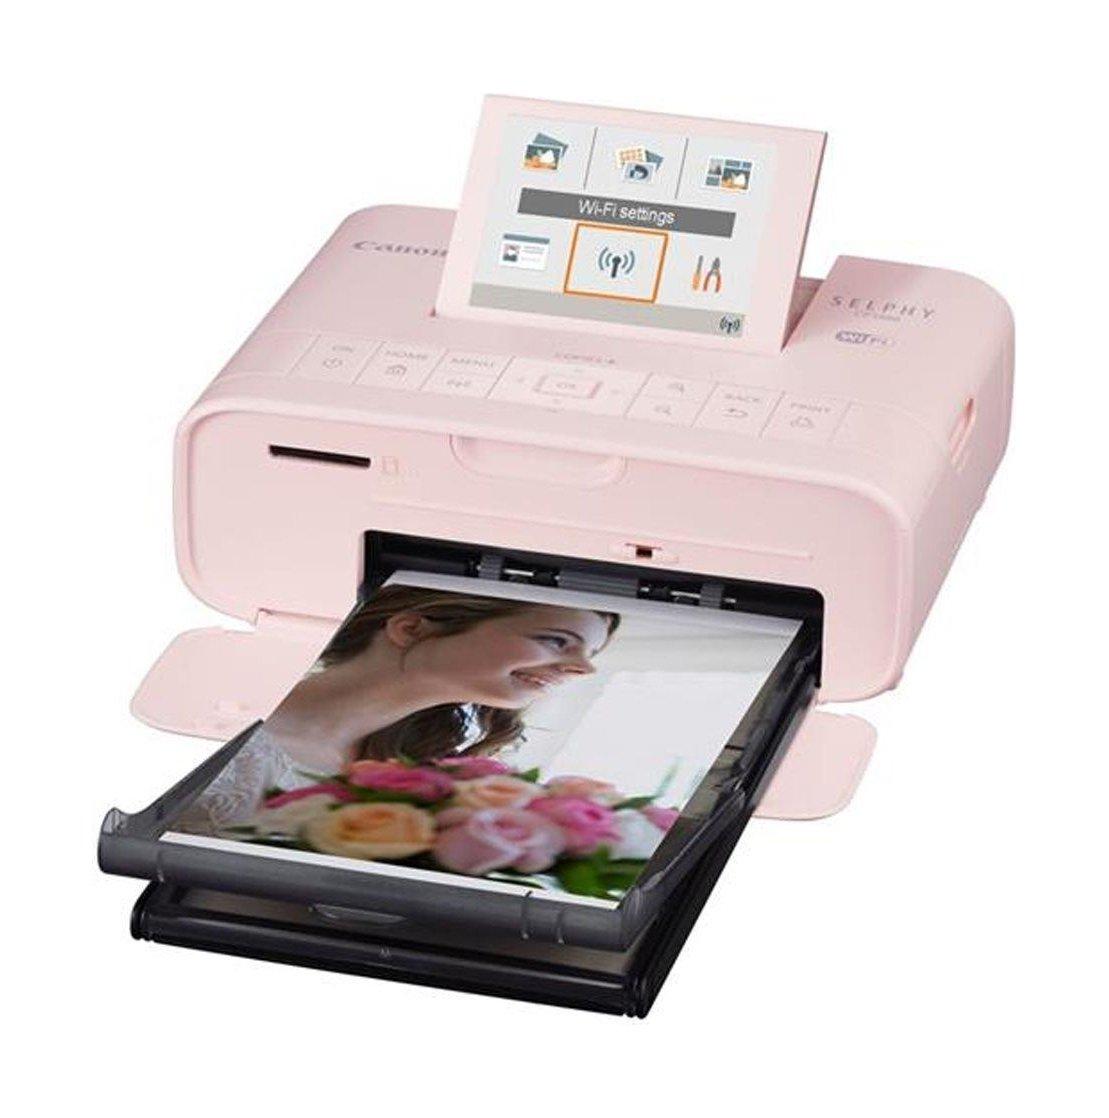 Buy Canon selphy cp1300 compact photo printer - pink in Saudi Arabia